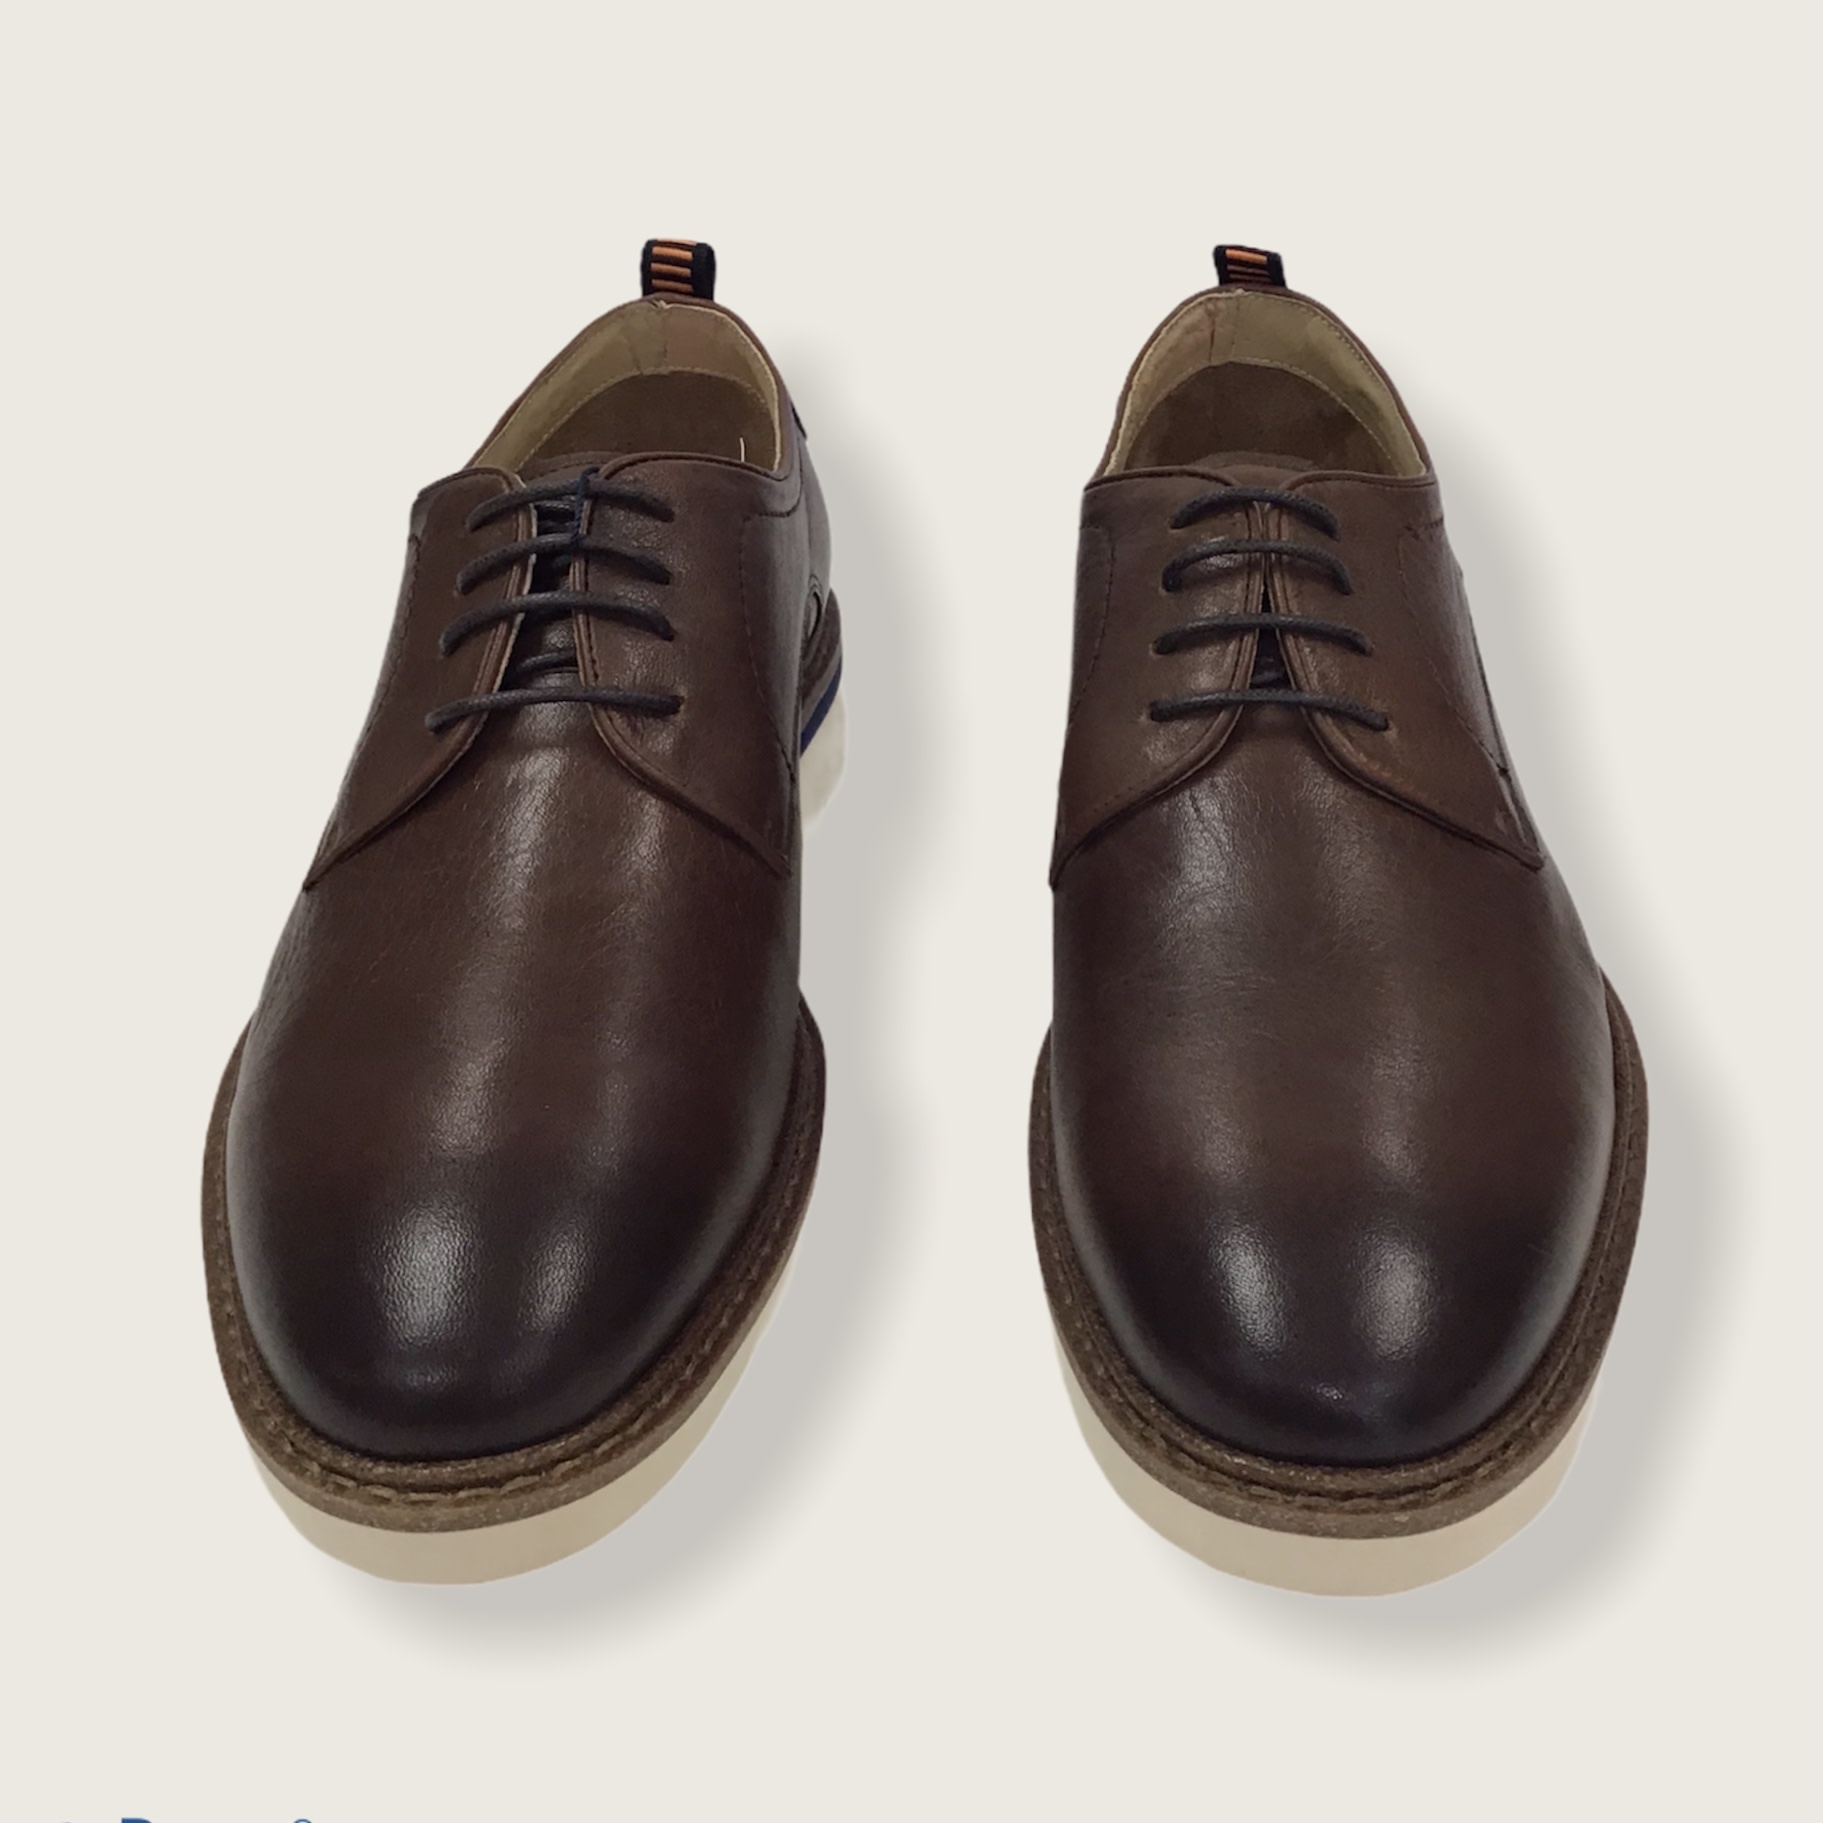 morgan and co. mng 1114 shoe - JP Moran & Co. Menswear